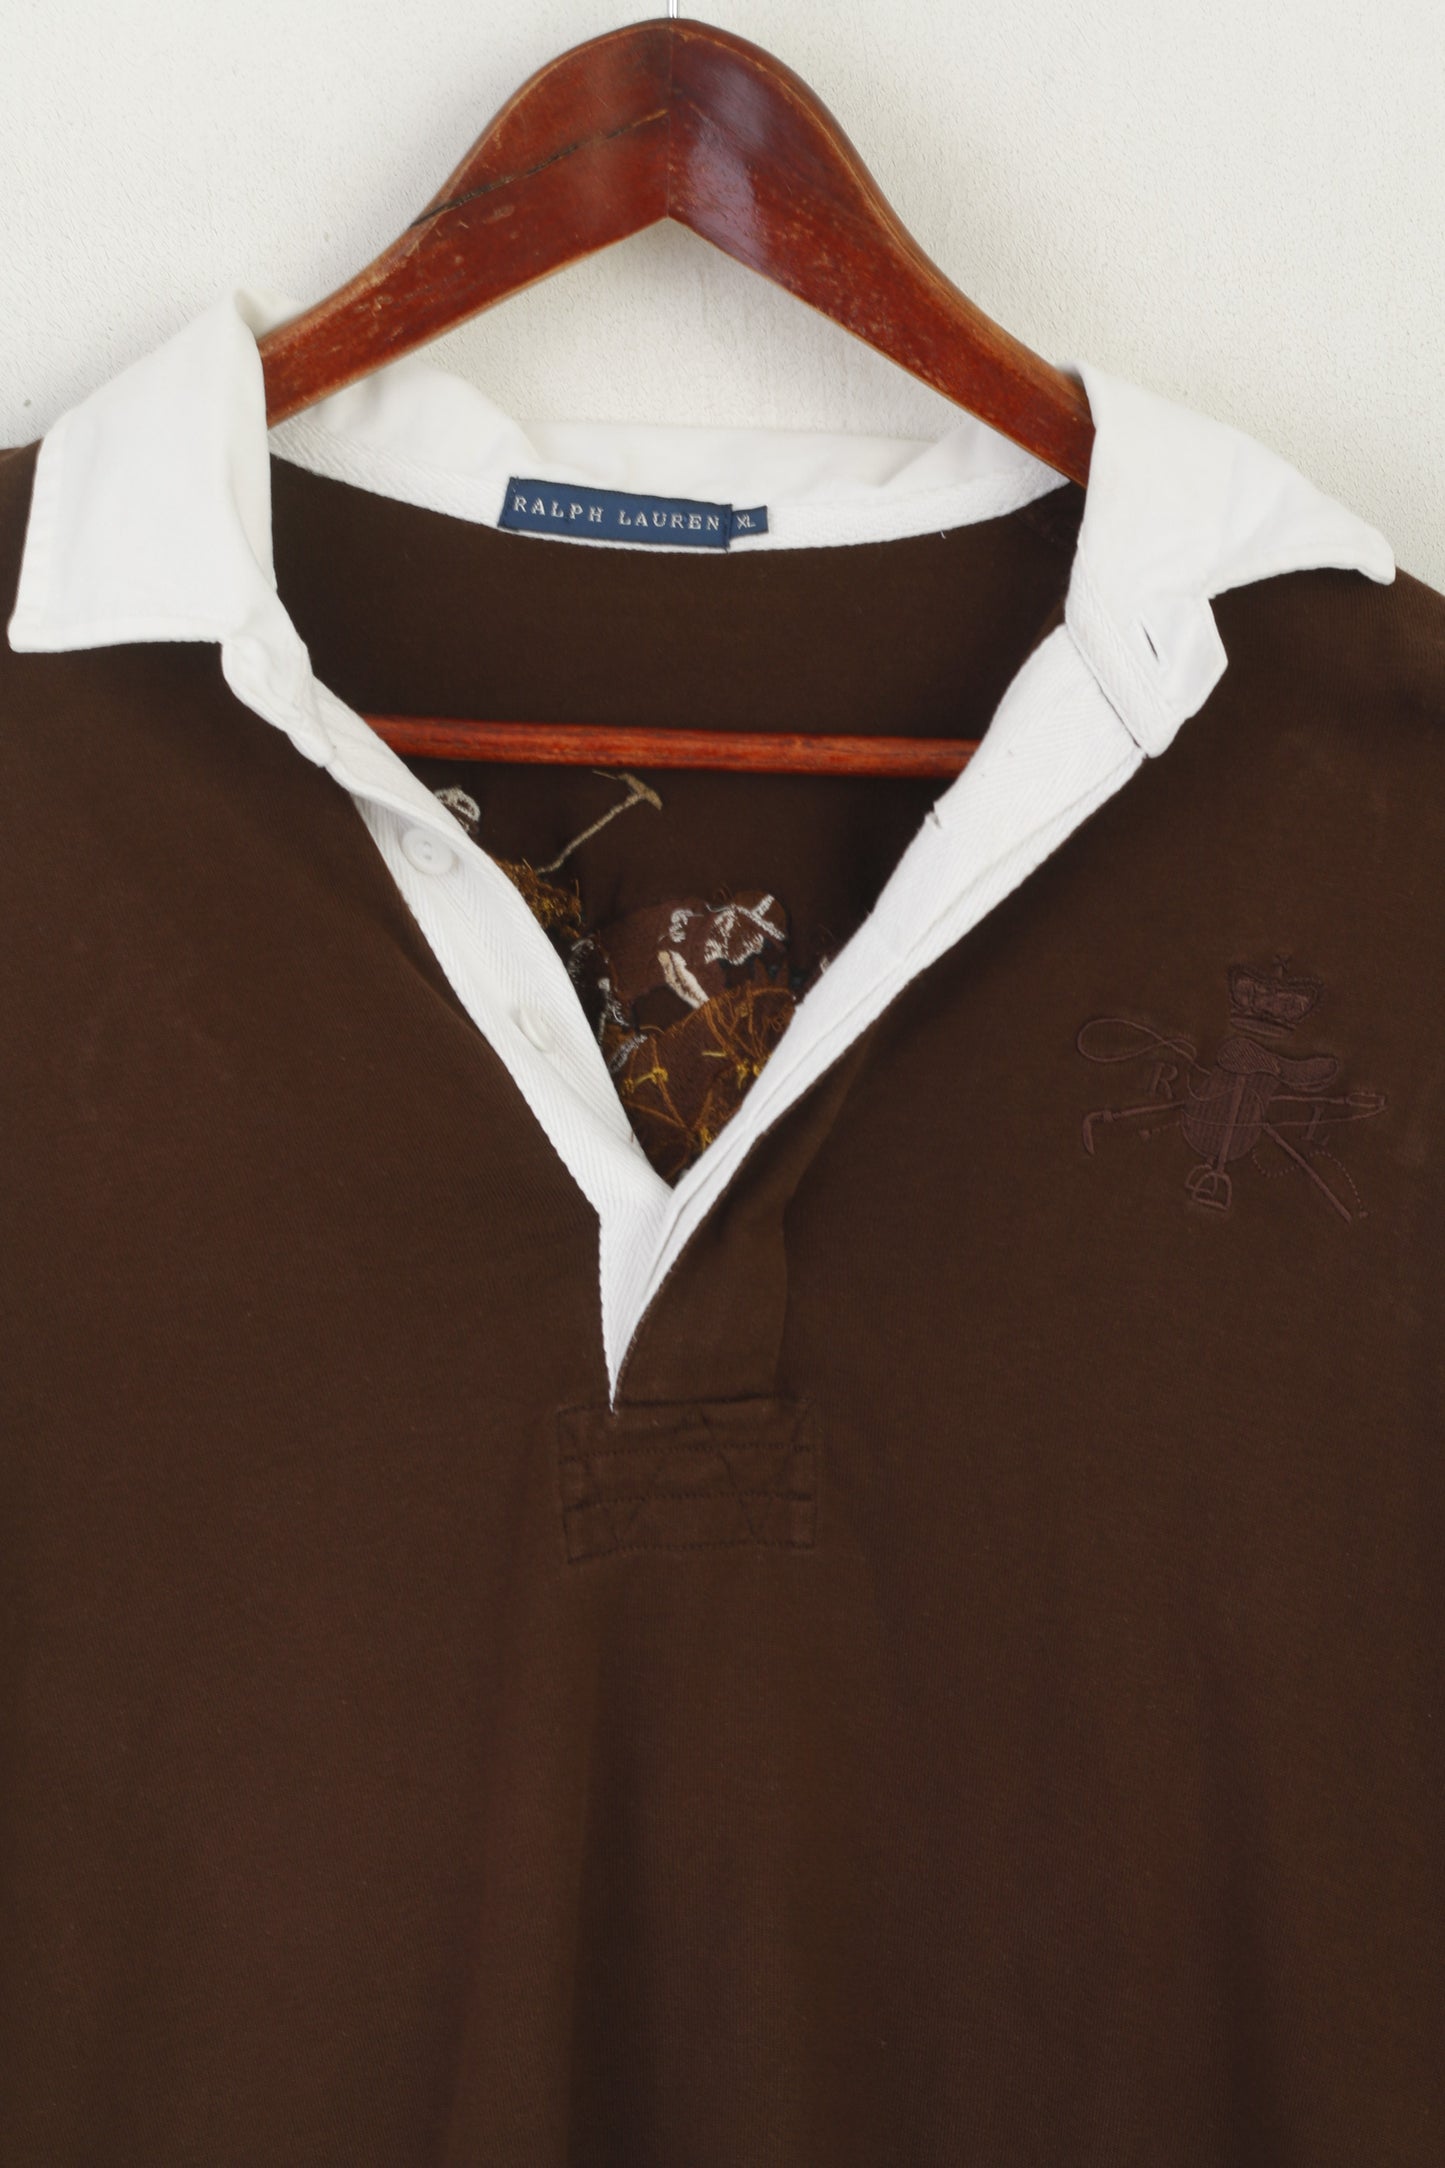 Ralph Lauren Women XL Polo Shirt Brown Vintage Cotton Long Sleeve Rugby Top